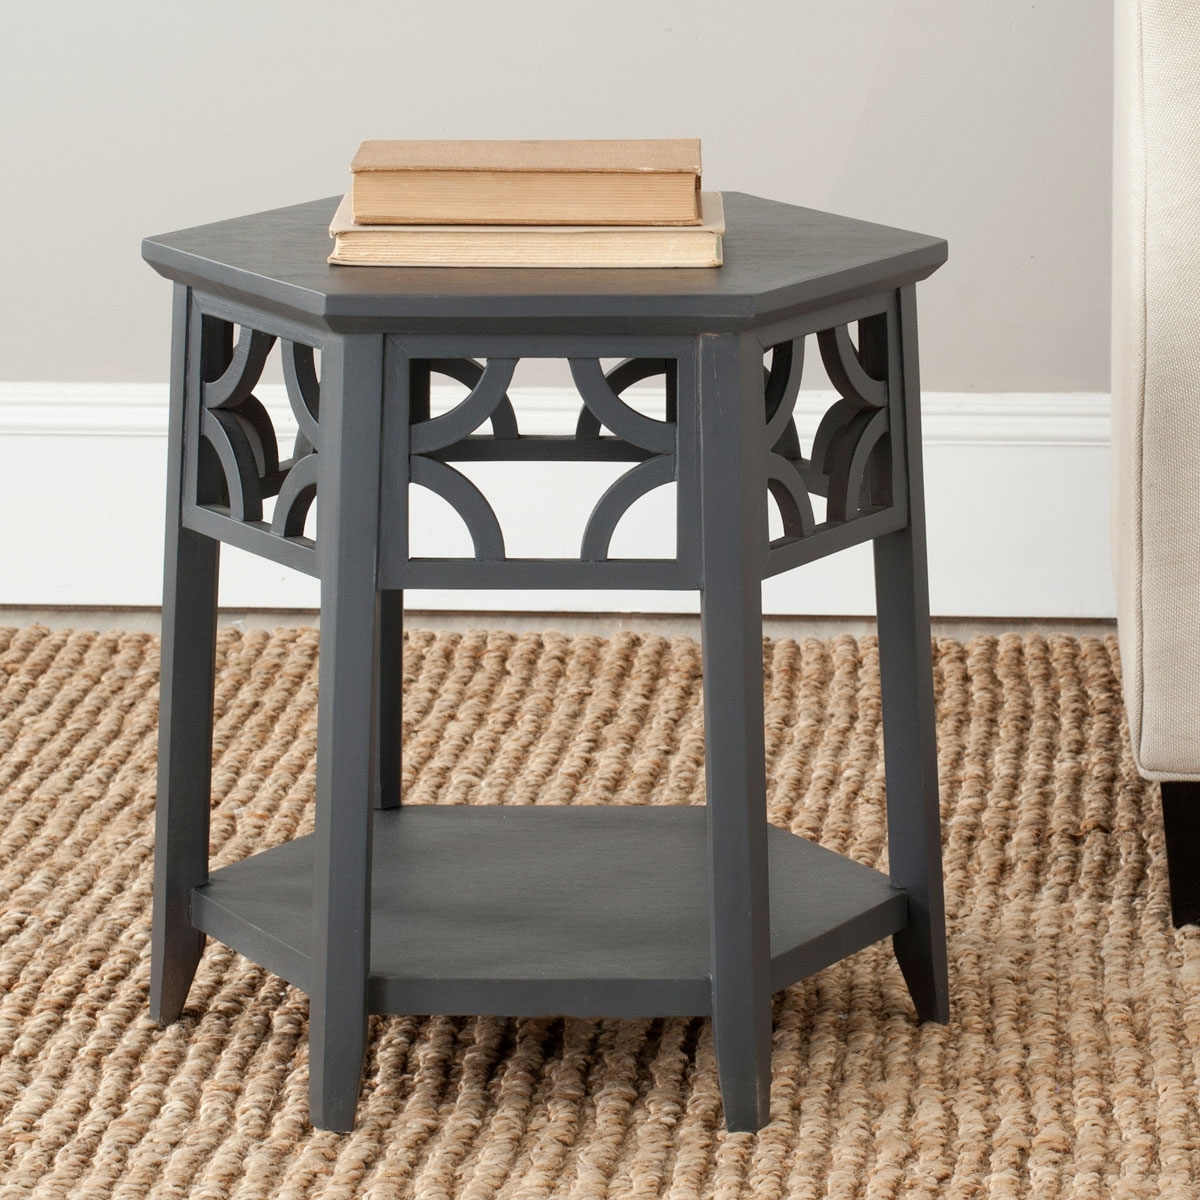 Connr Hexagon End Table - Charcoal Grey - Arlo Home - Image 1